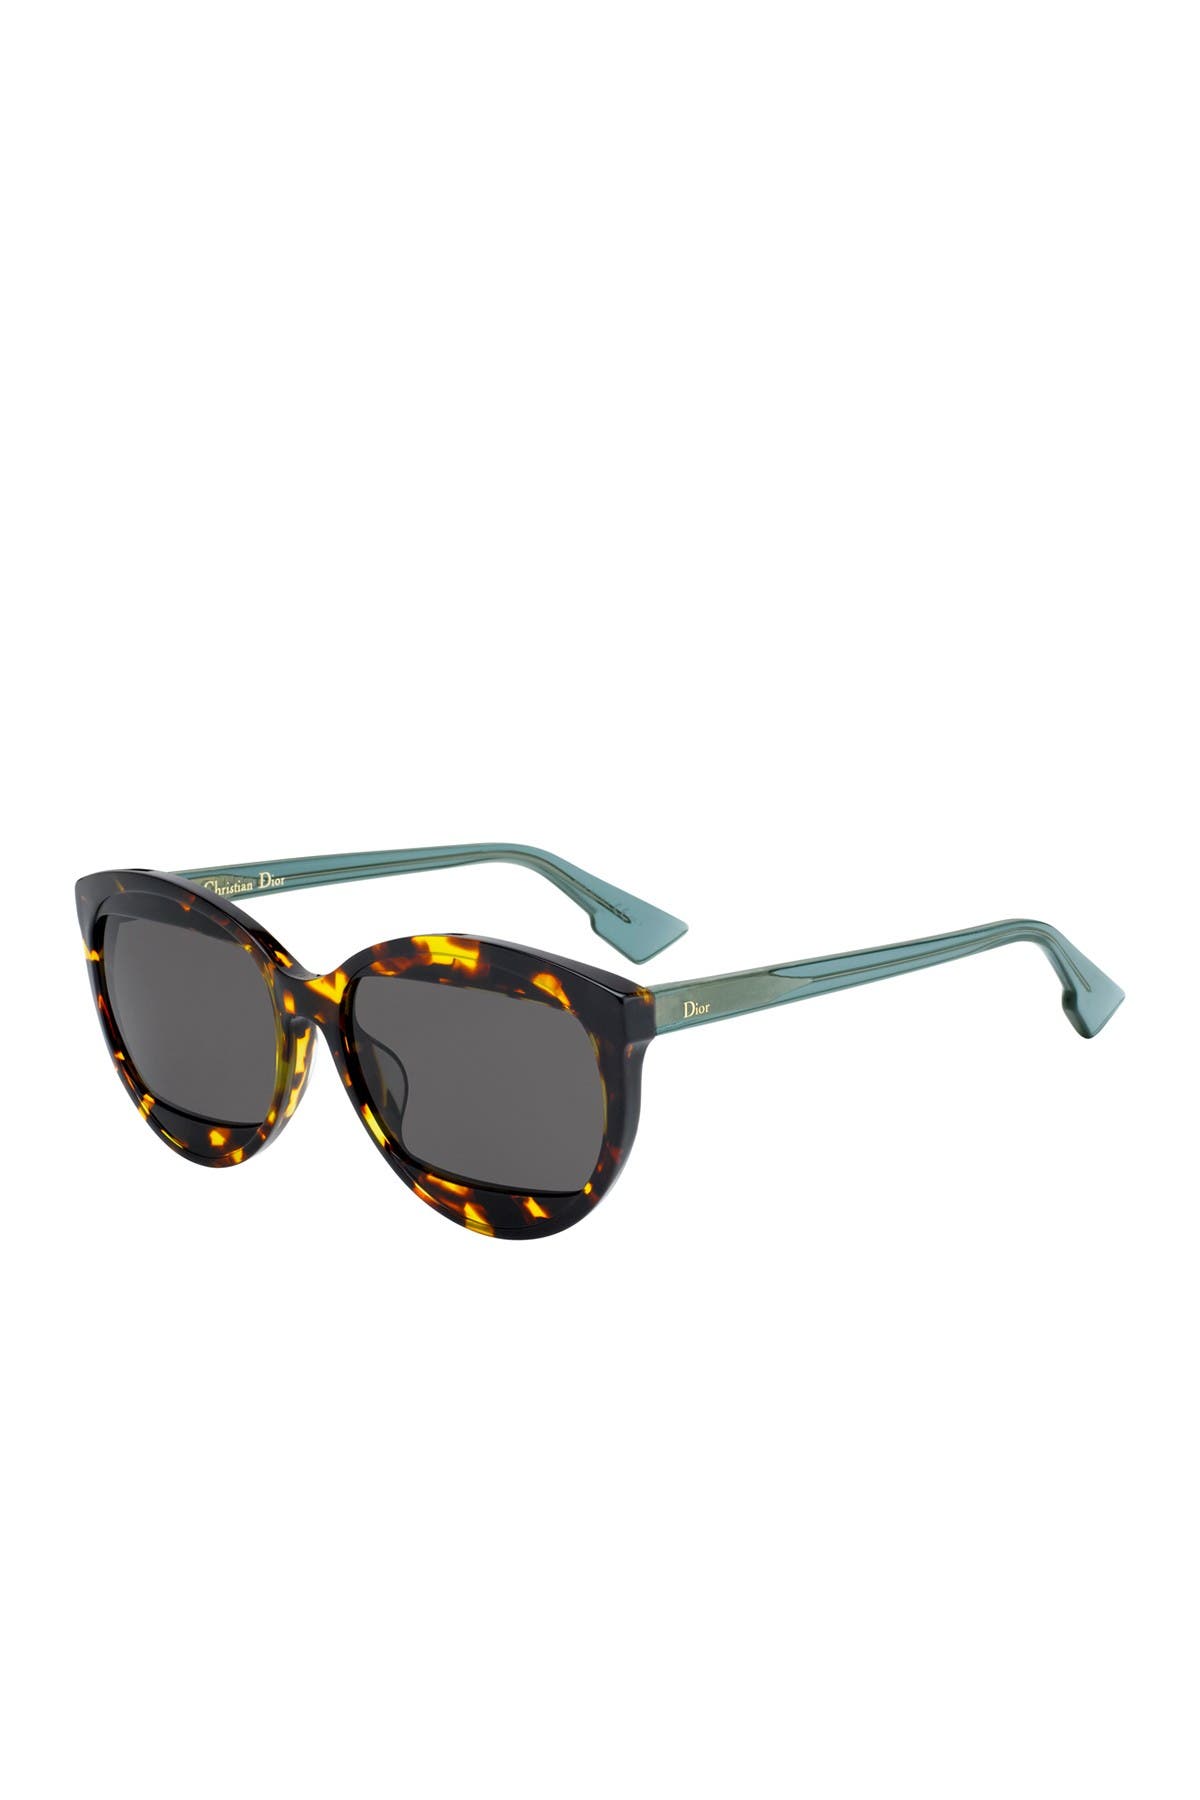 dior mania 1 sunglasses